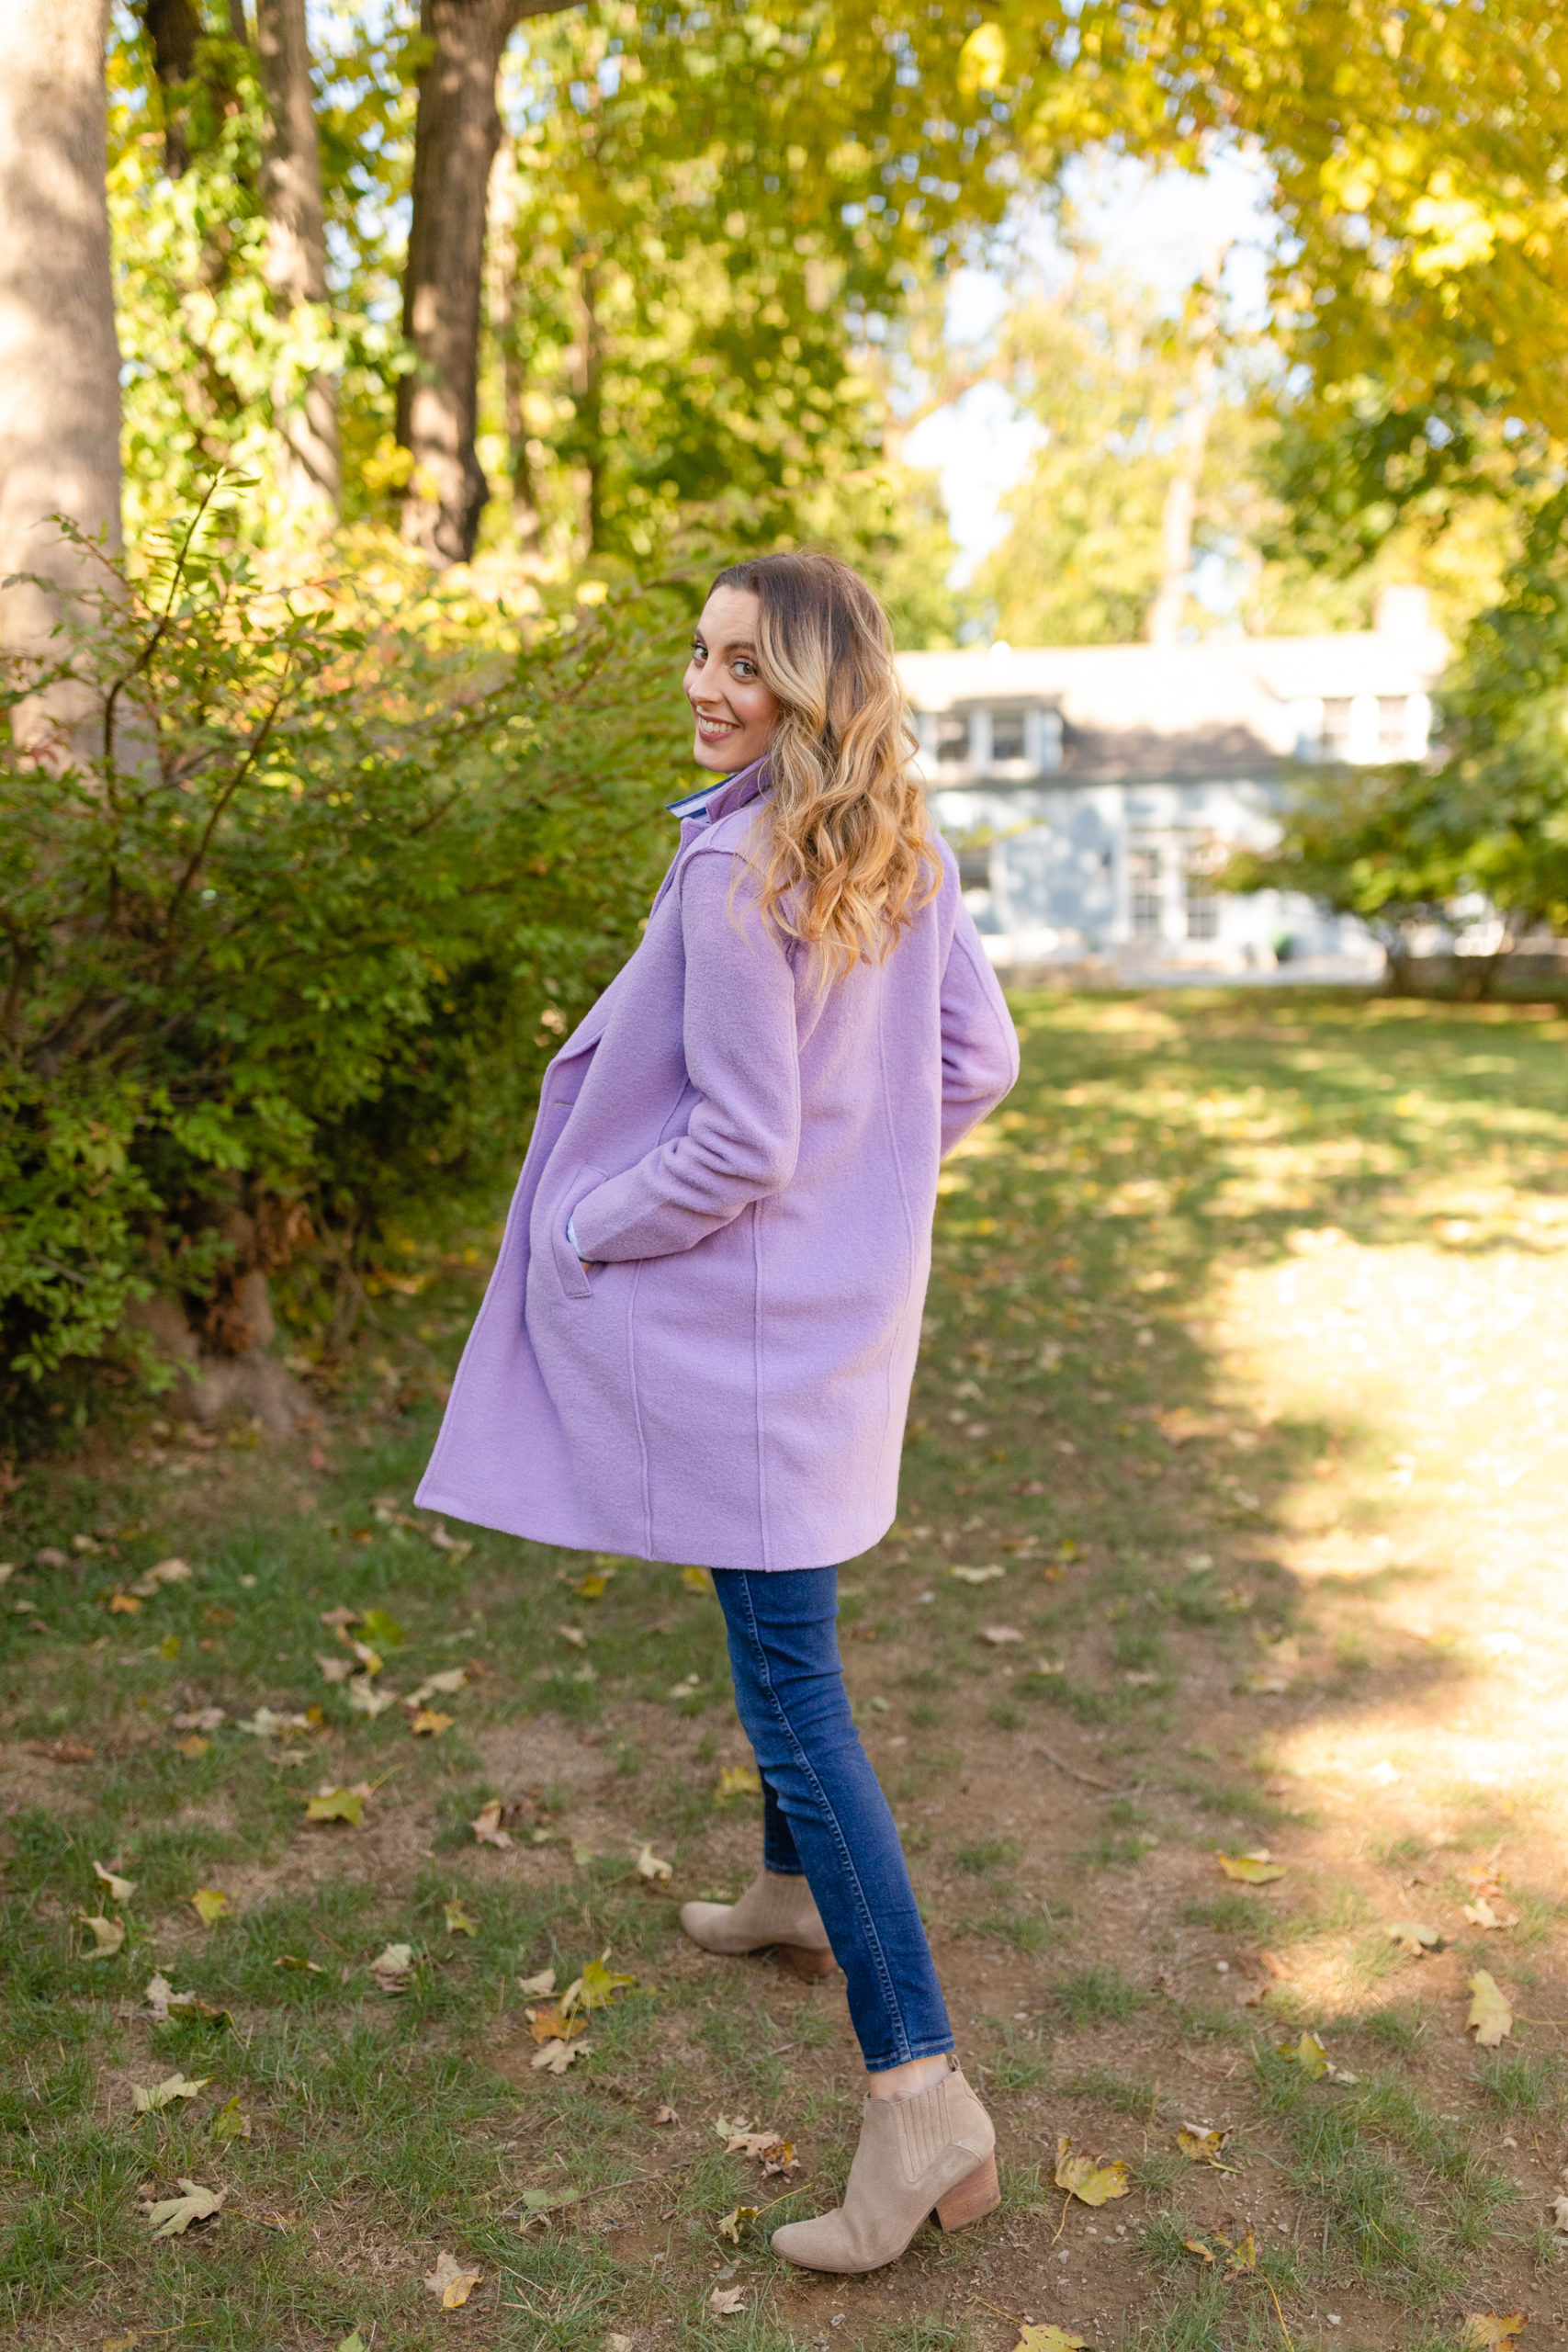 Eva Amurri shares her favorite fall jackets for 2020